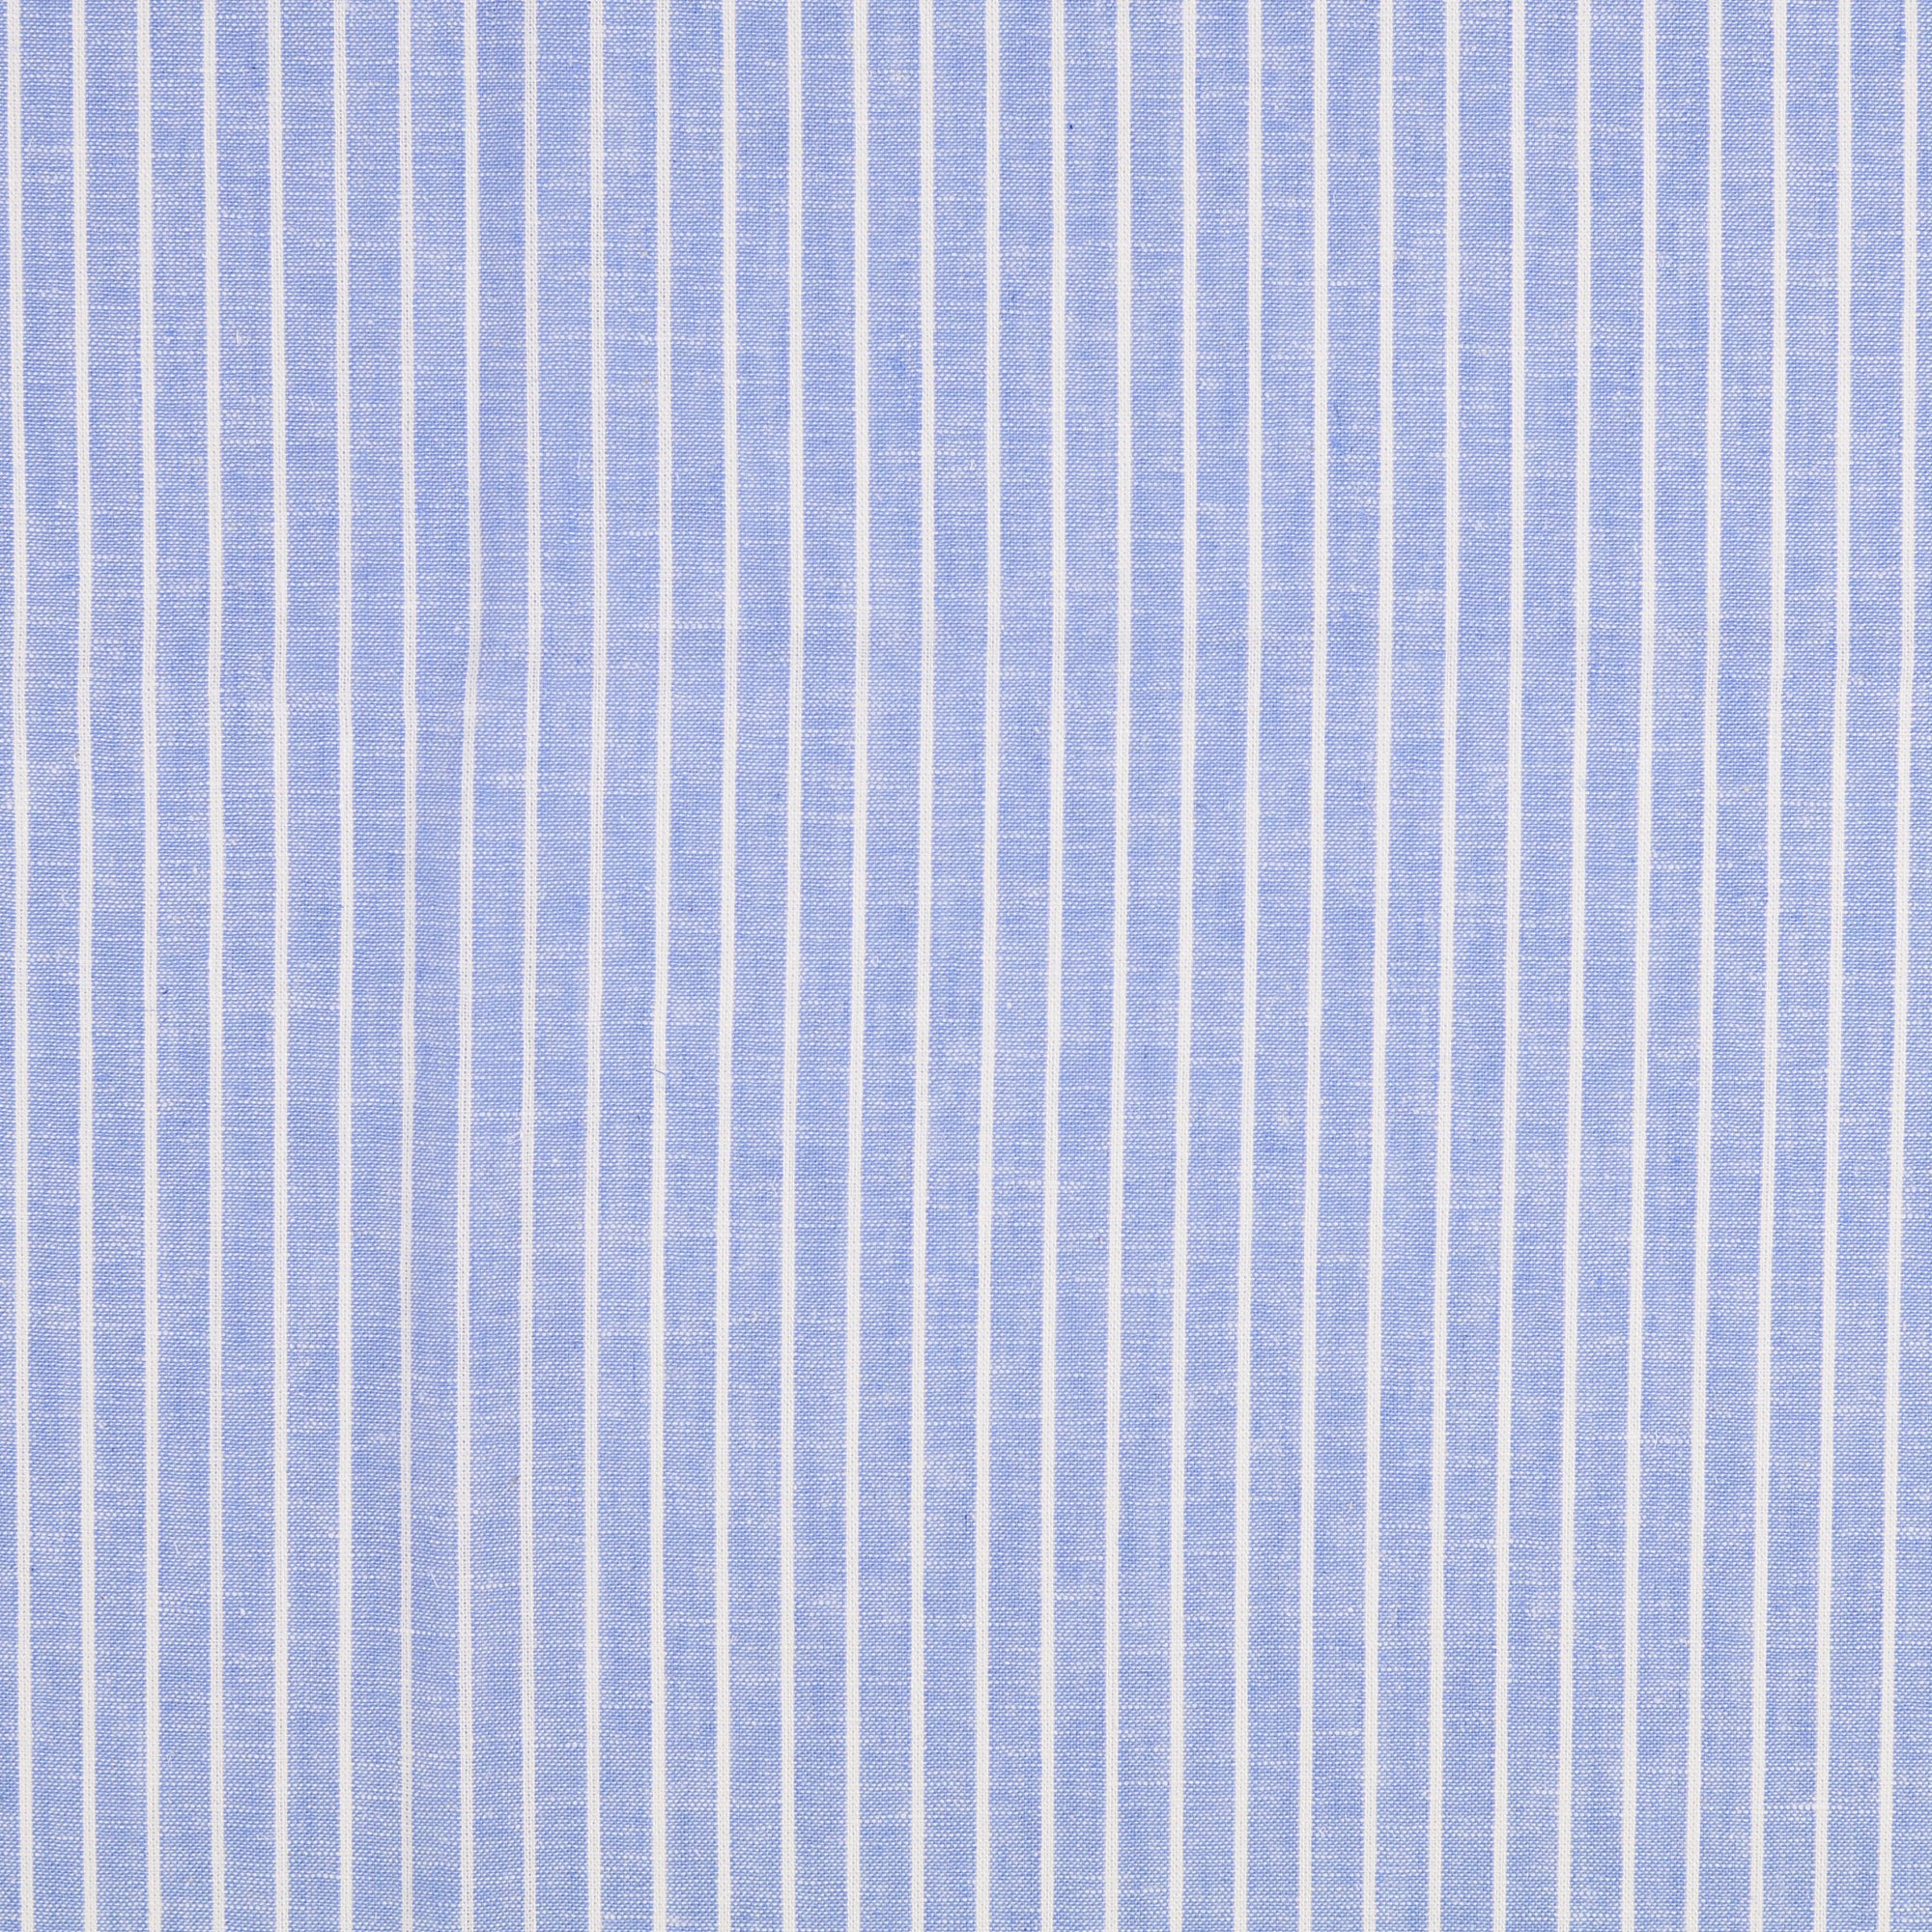 Stripe Light Blue Linen Cotton Fabric